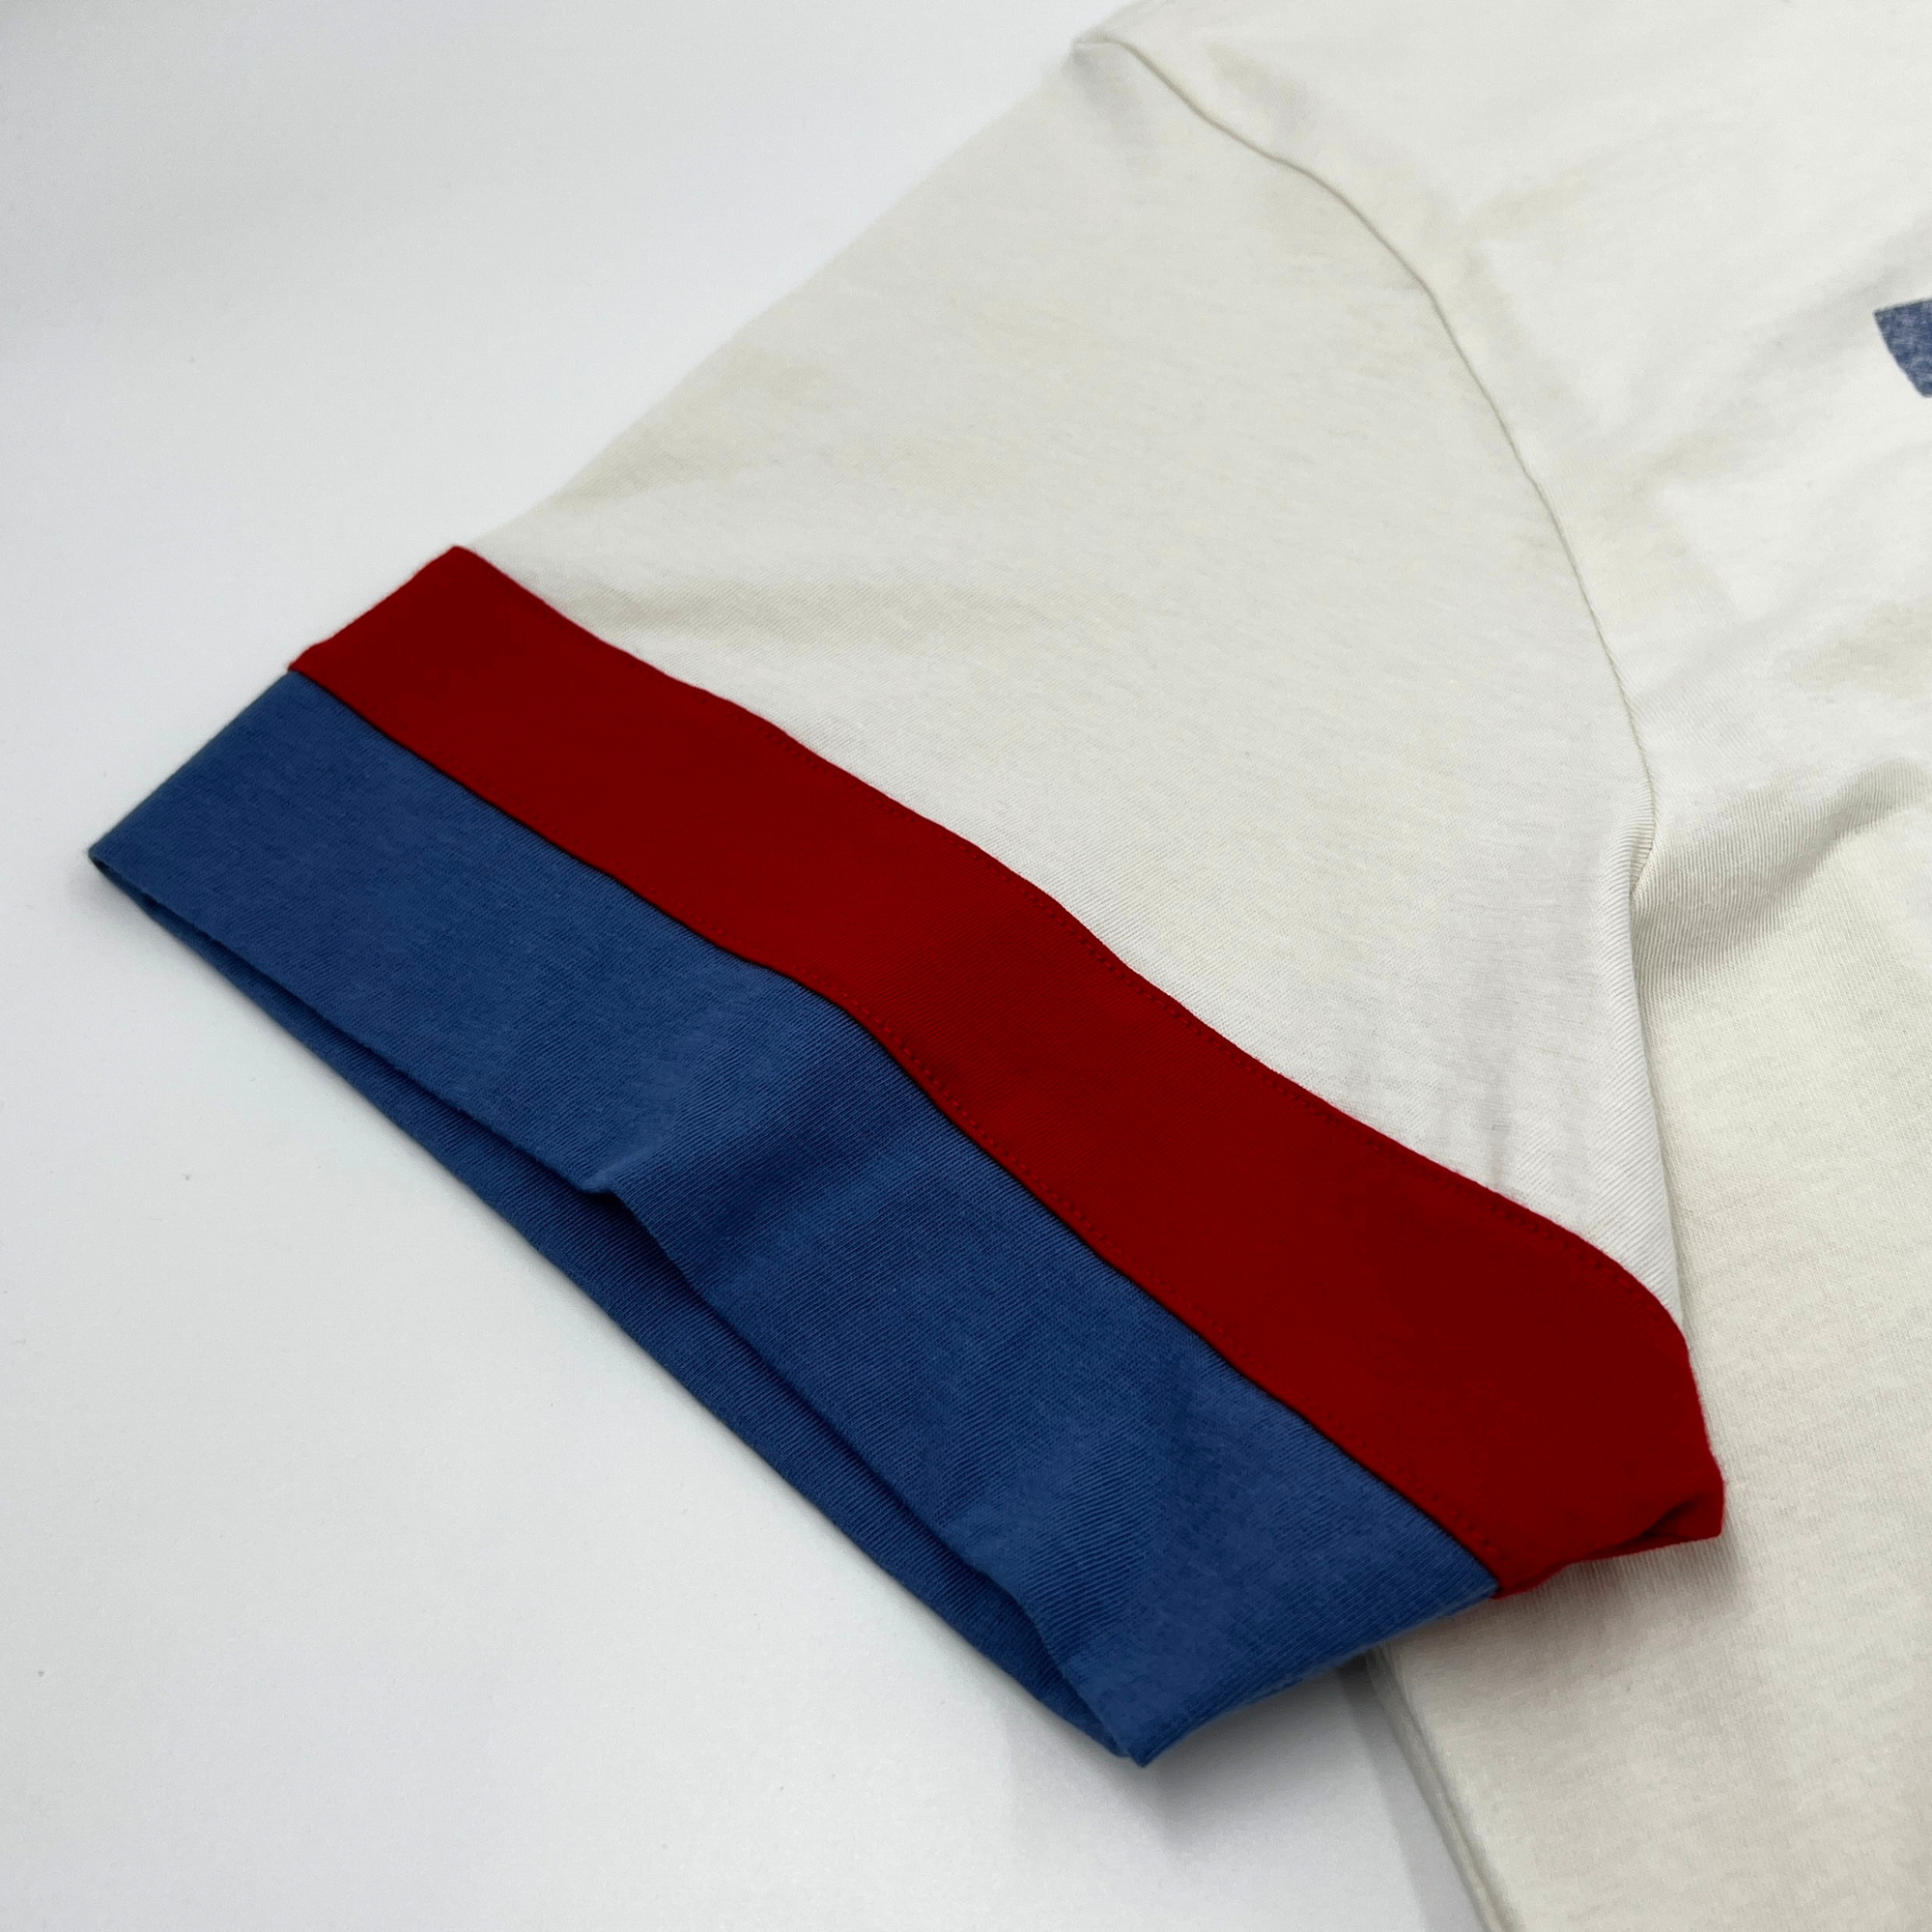 &#39;47 Brand Bills Sandstone with Blue &amp; Red Stripes Short Sleeve Shirt